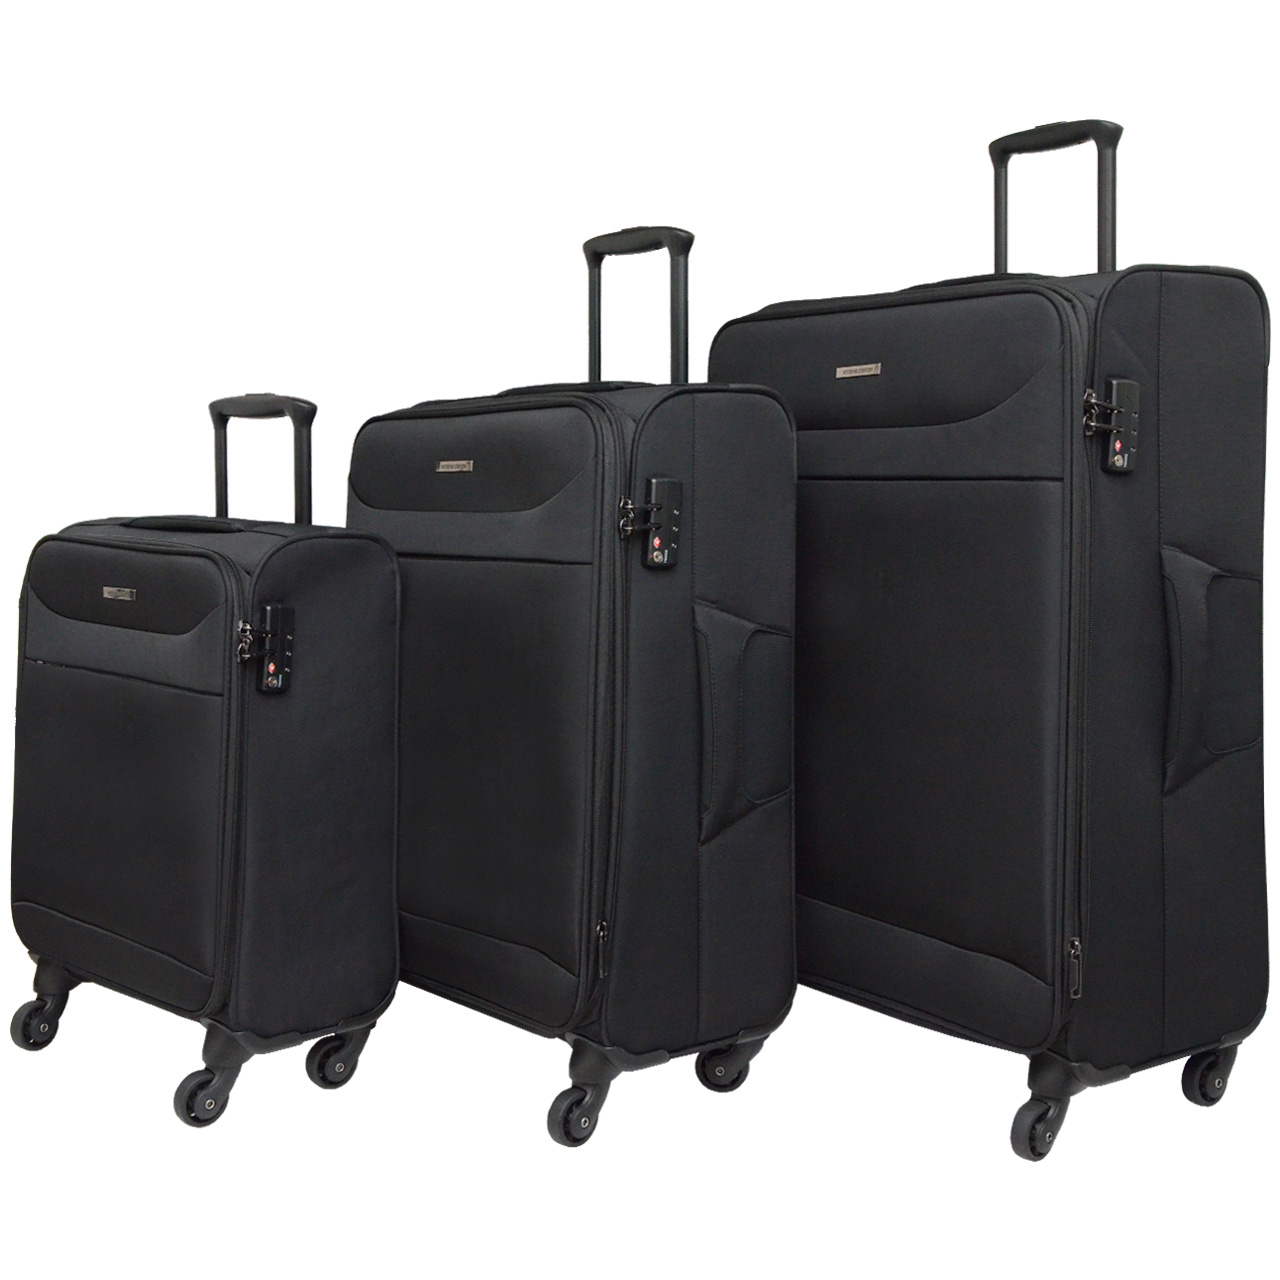 مجموعه سه عددی چمدان ویکتوریا استیشن مدل NVY 700376